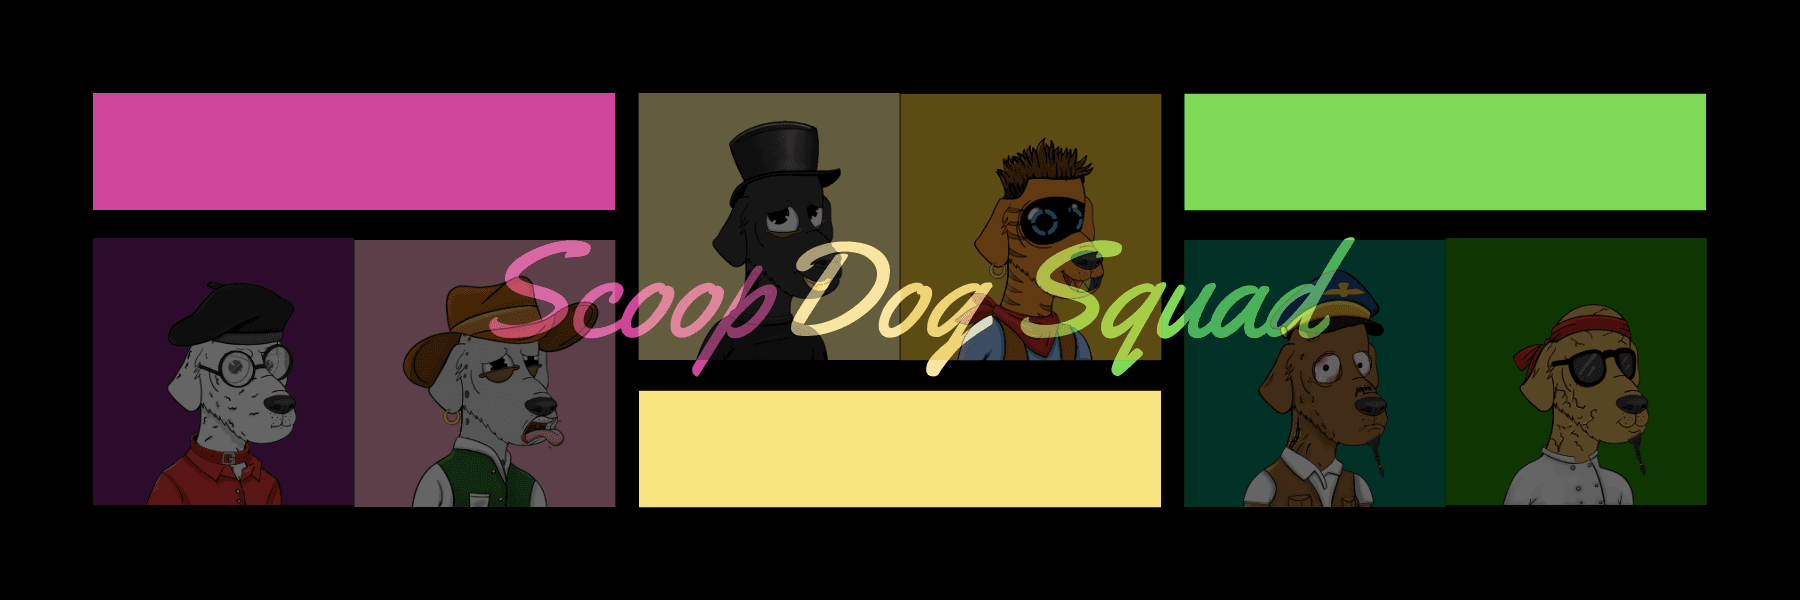 ScoopDogSquad banner